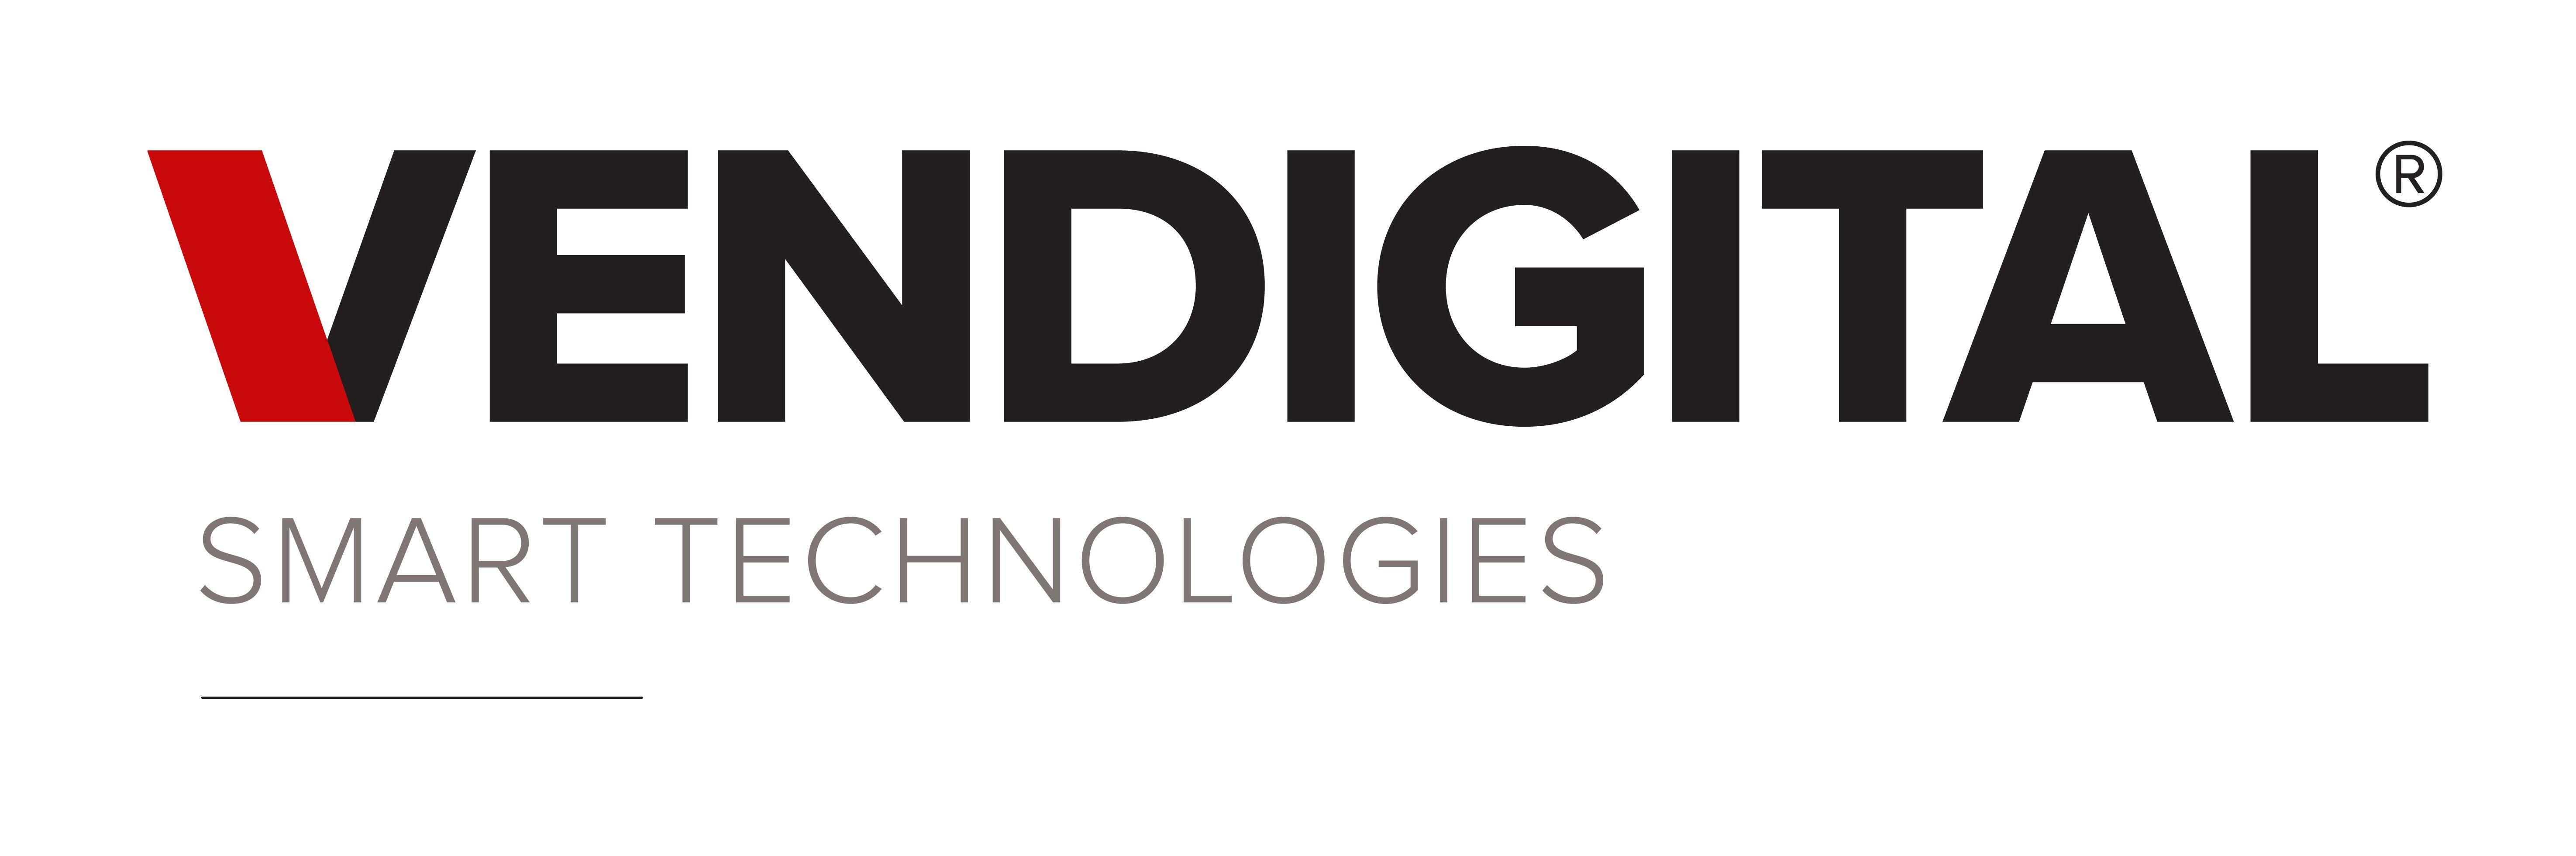 Smart Technologies Logo - Vendigital Logo Smart Technologies Print